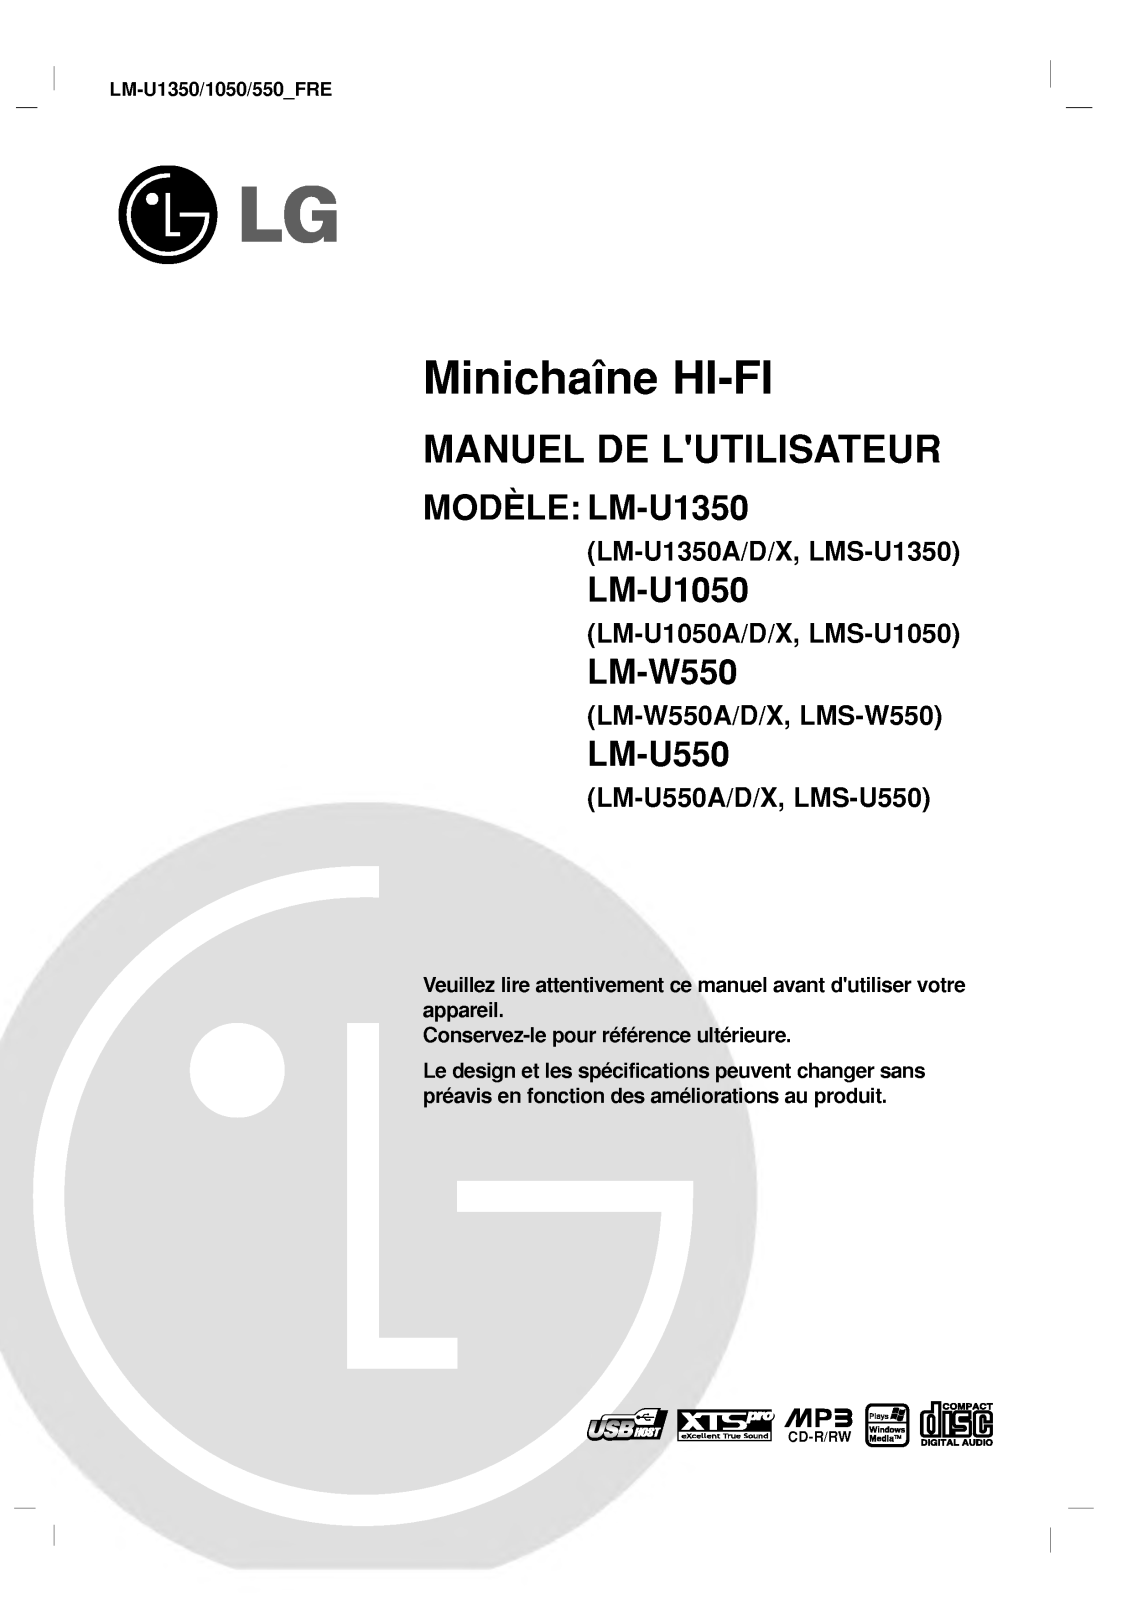 LG LM-U550D User Manual